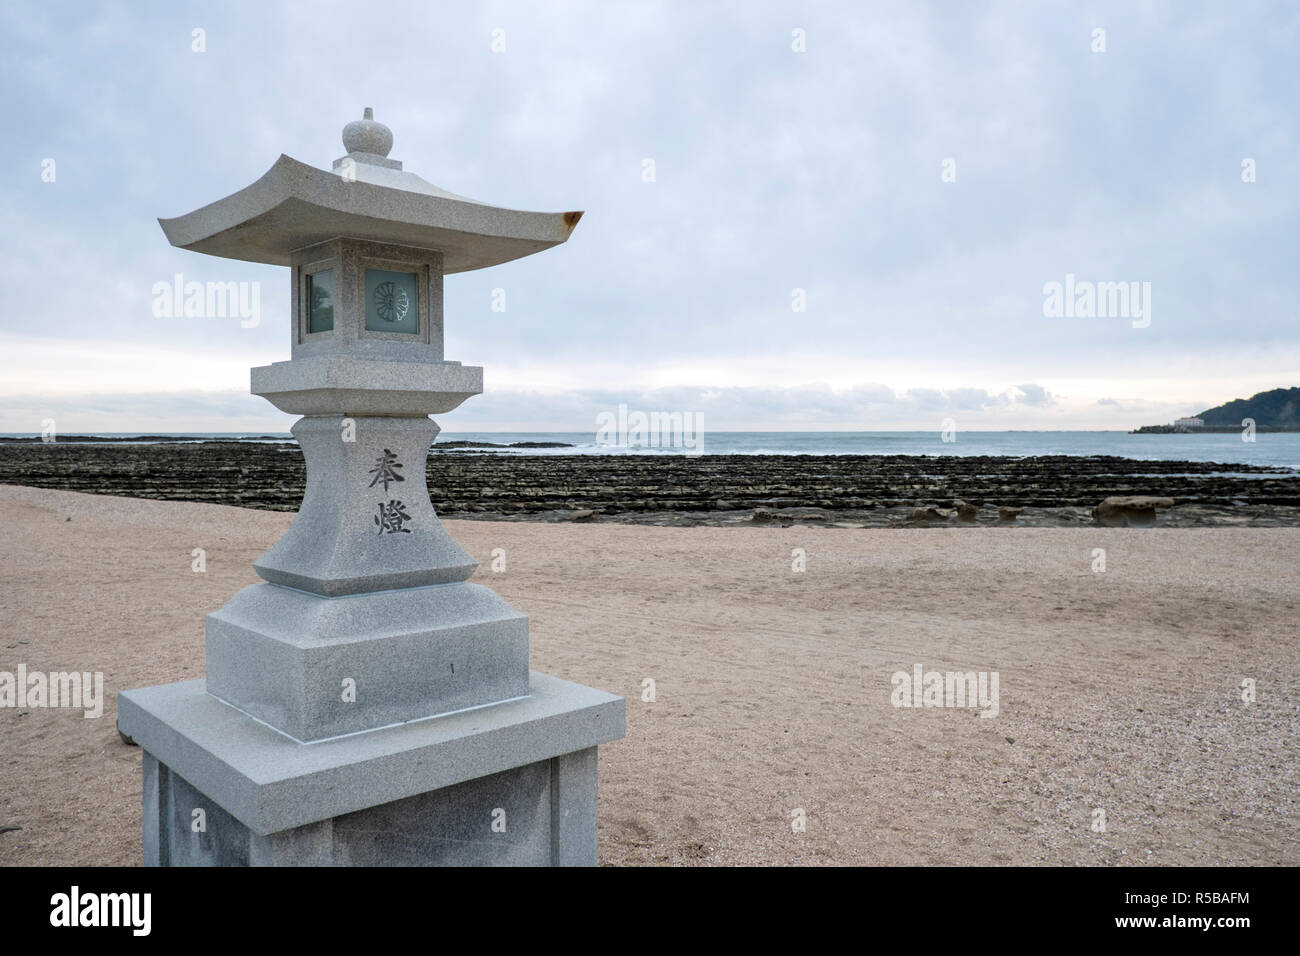 Aoshima island hi-res stock photography and images - Alamy